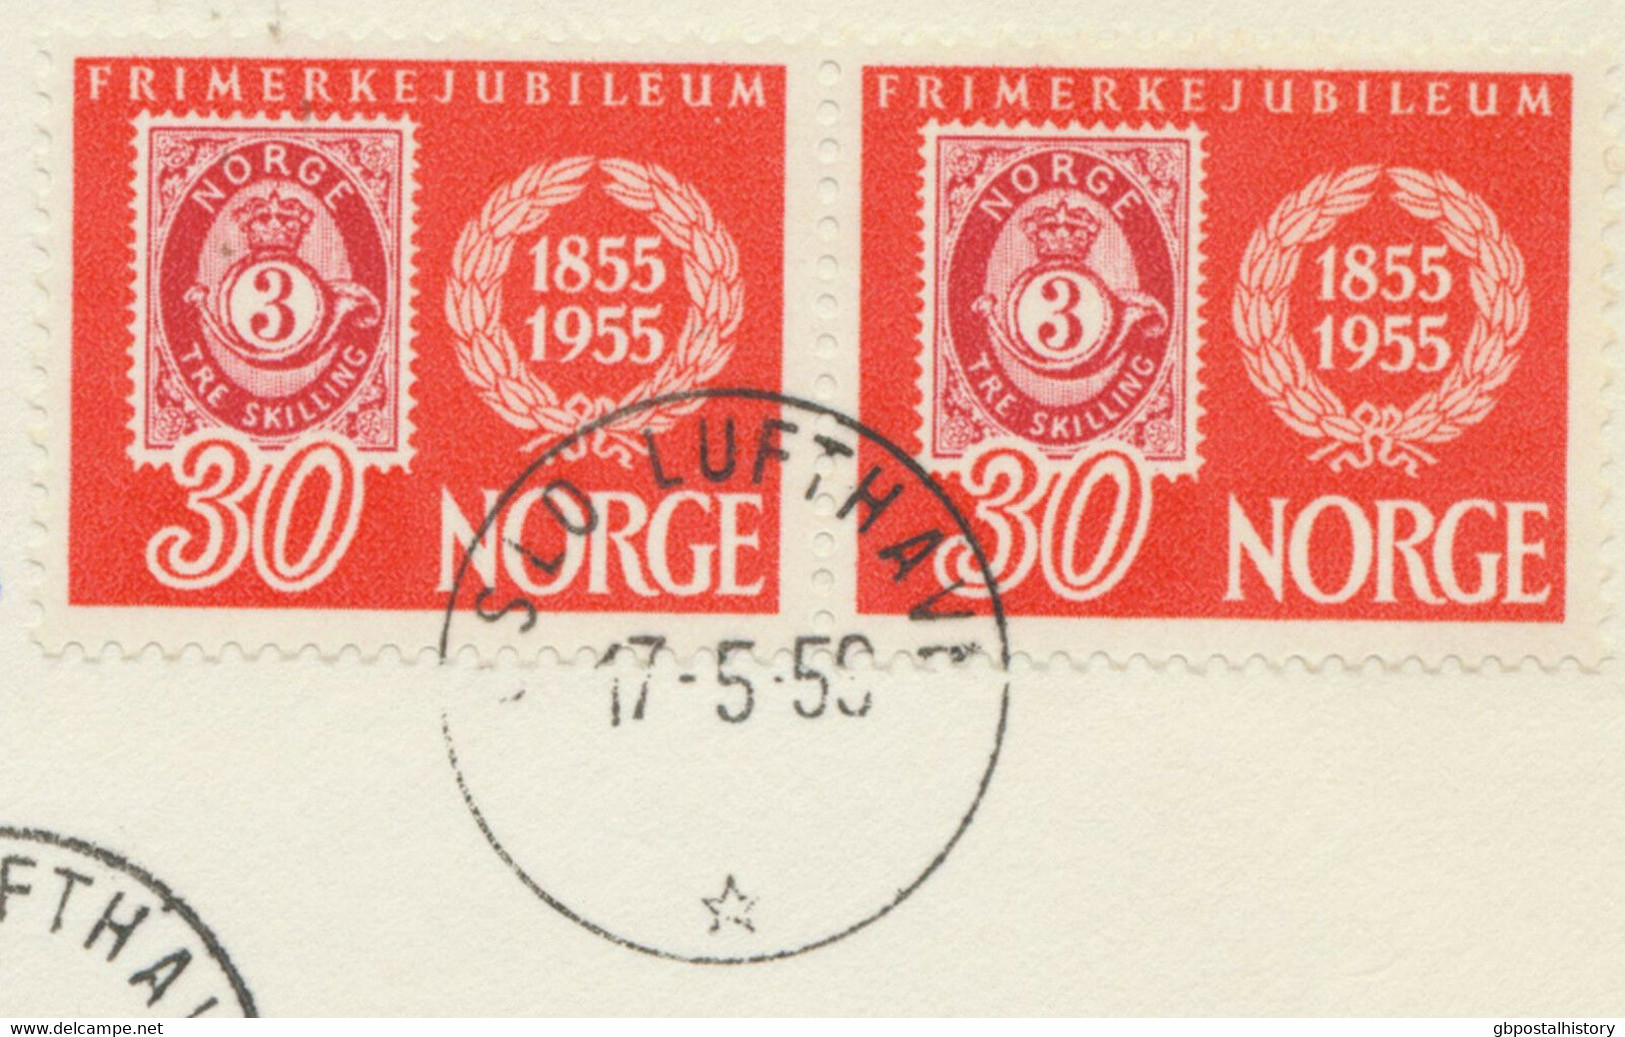 NORWAY 1959, First Flight SAS First Caravelle Jet Flight "OSLO - DÜSSELDORF" - Covers & Documents